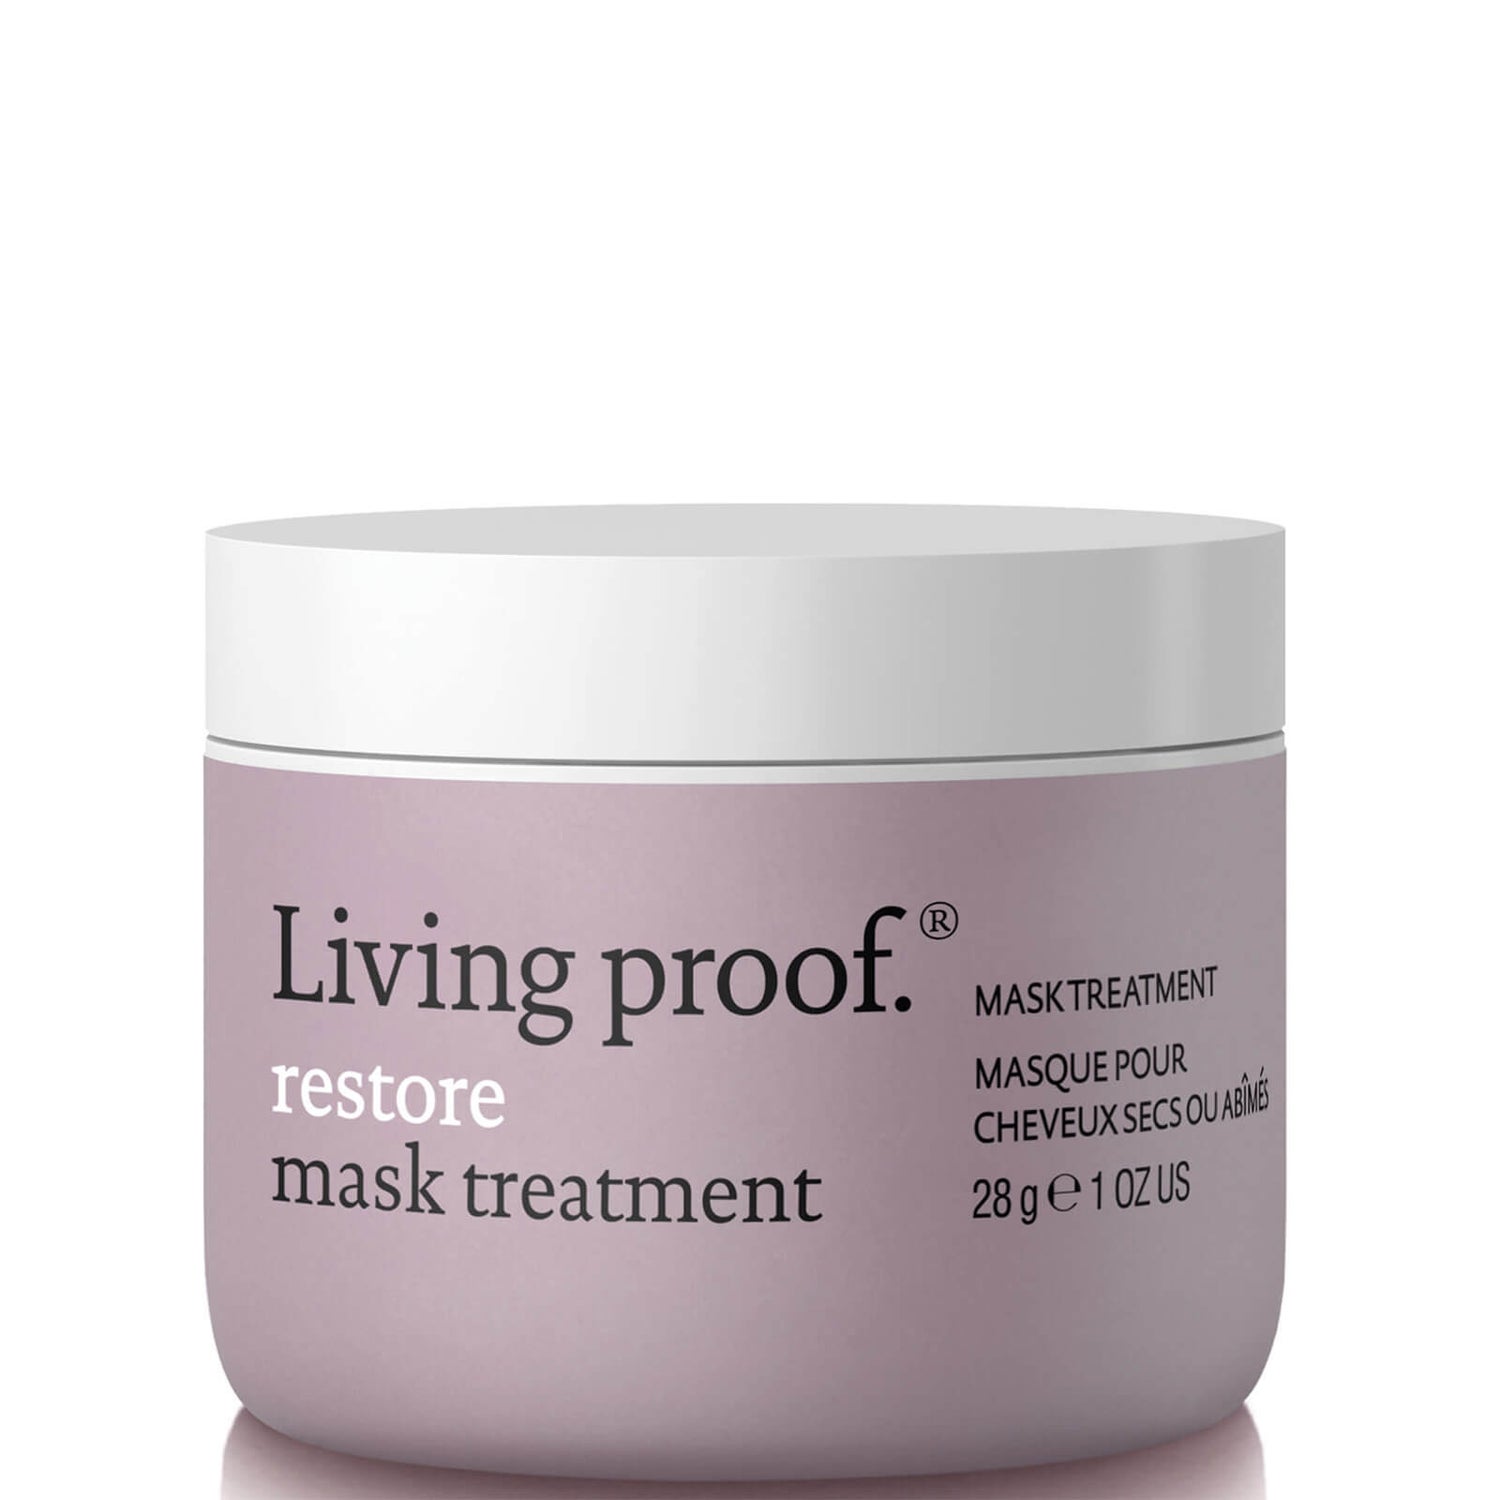 Living Proof Restore Mask Treatment maska regenerująca 28 g